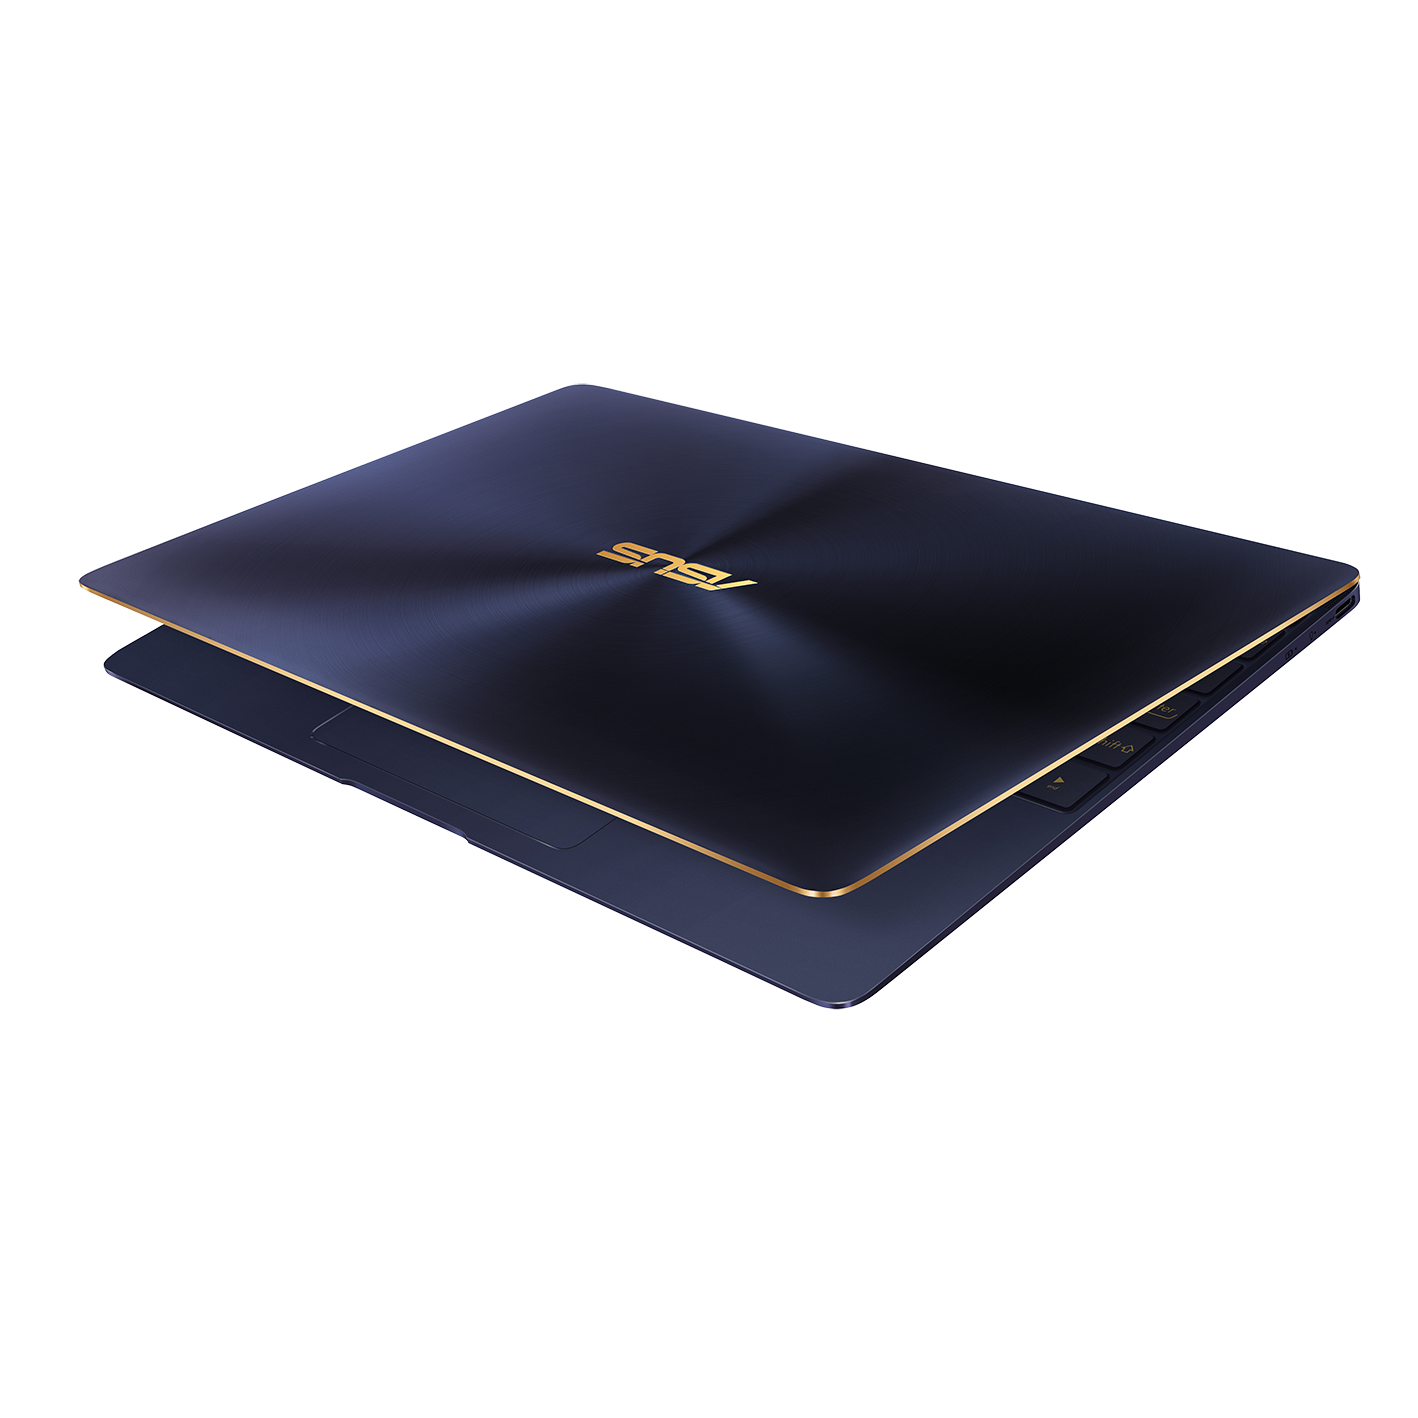 ASUS-ZenBook-3_UX390_unibody-design-wity-aerospace-grade-alloy